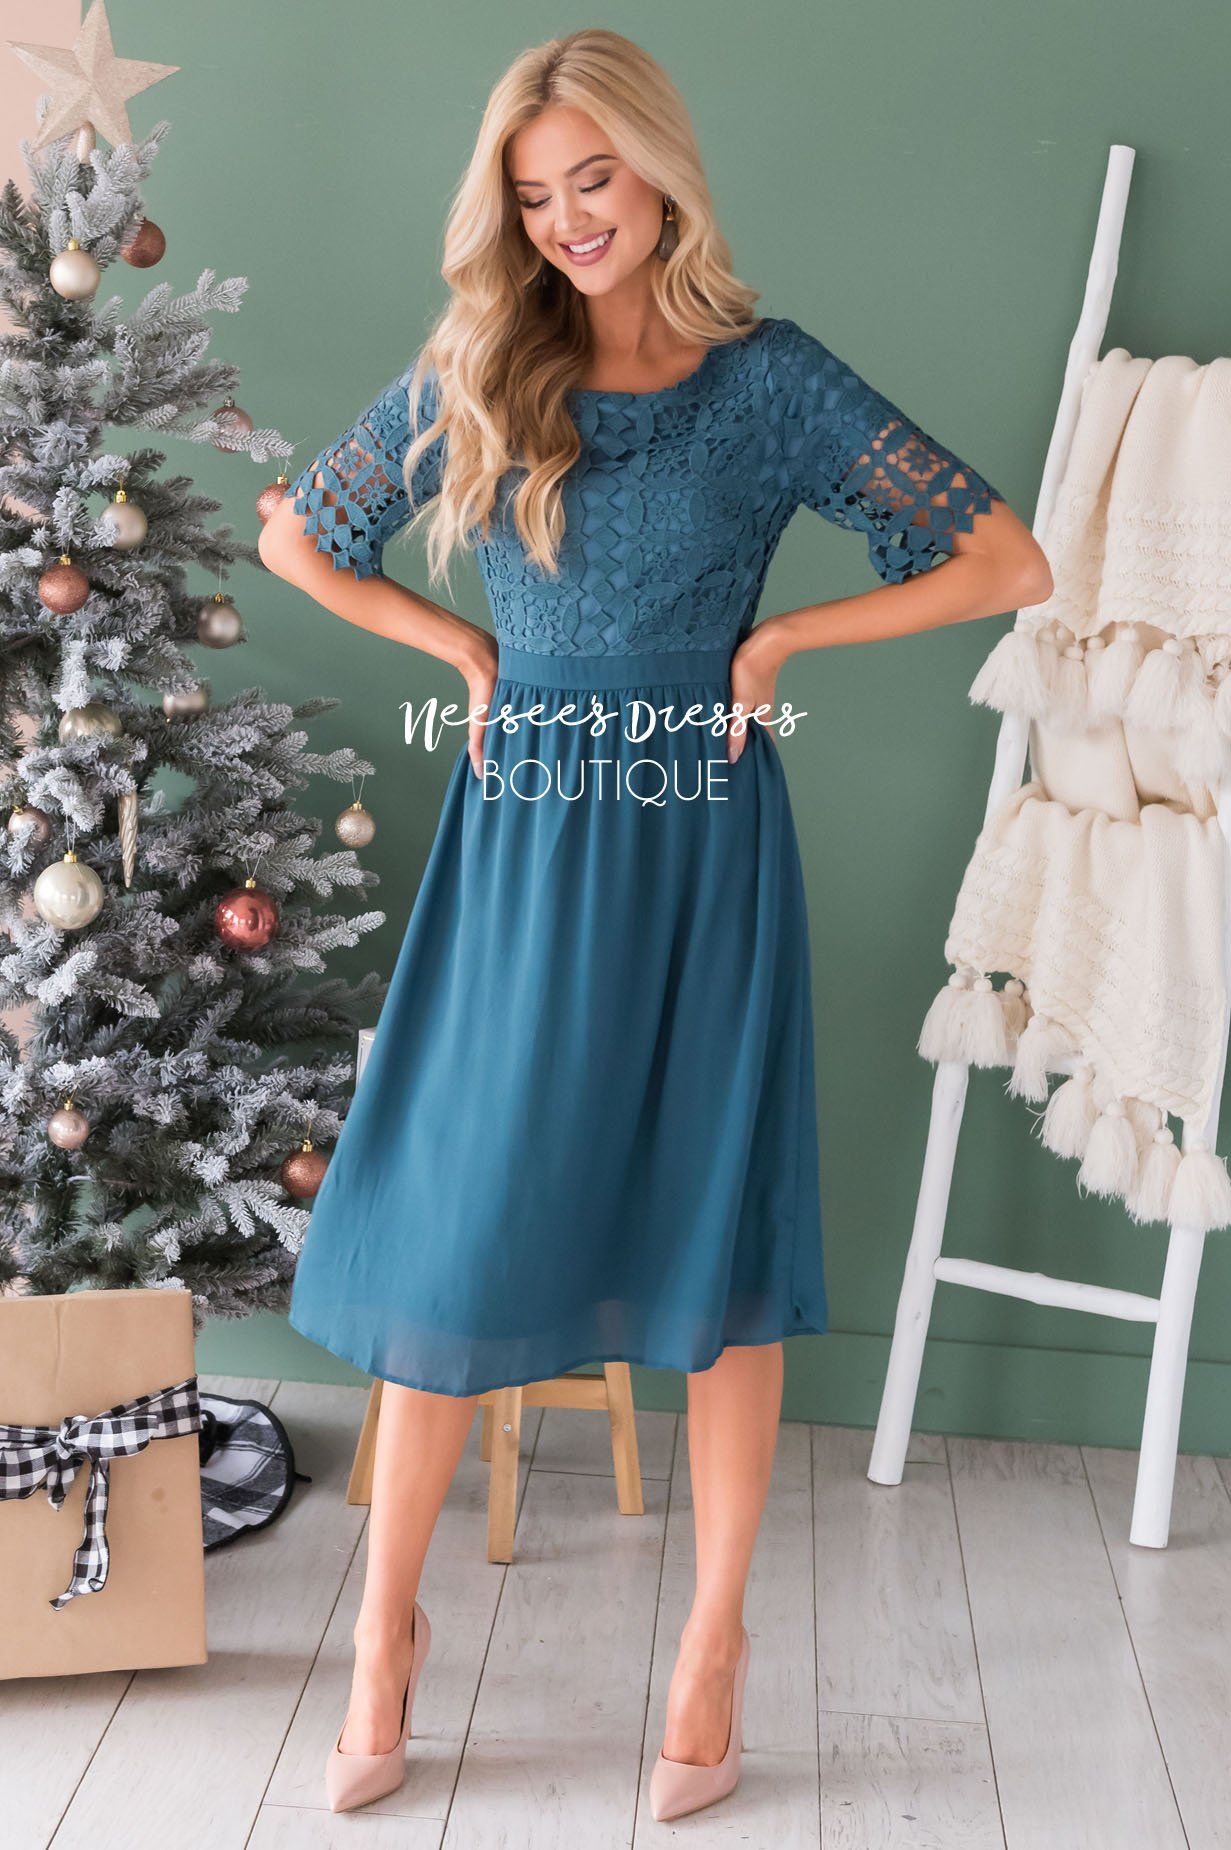 Teal Lace Chiffon Skirt Modest Dress | Best Place To Buy Modest Dress ...